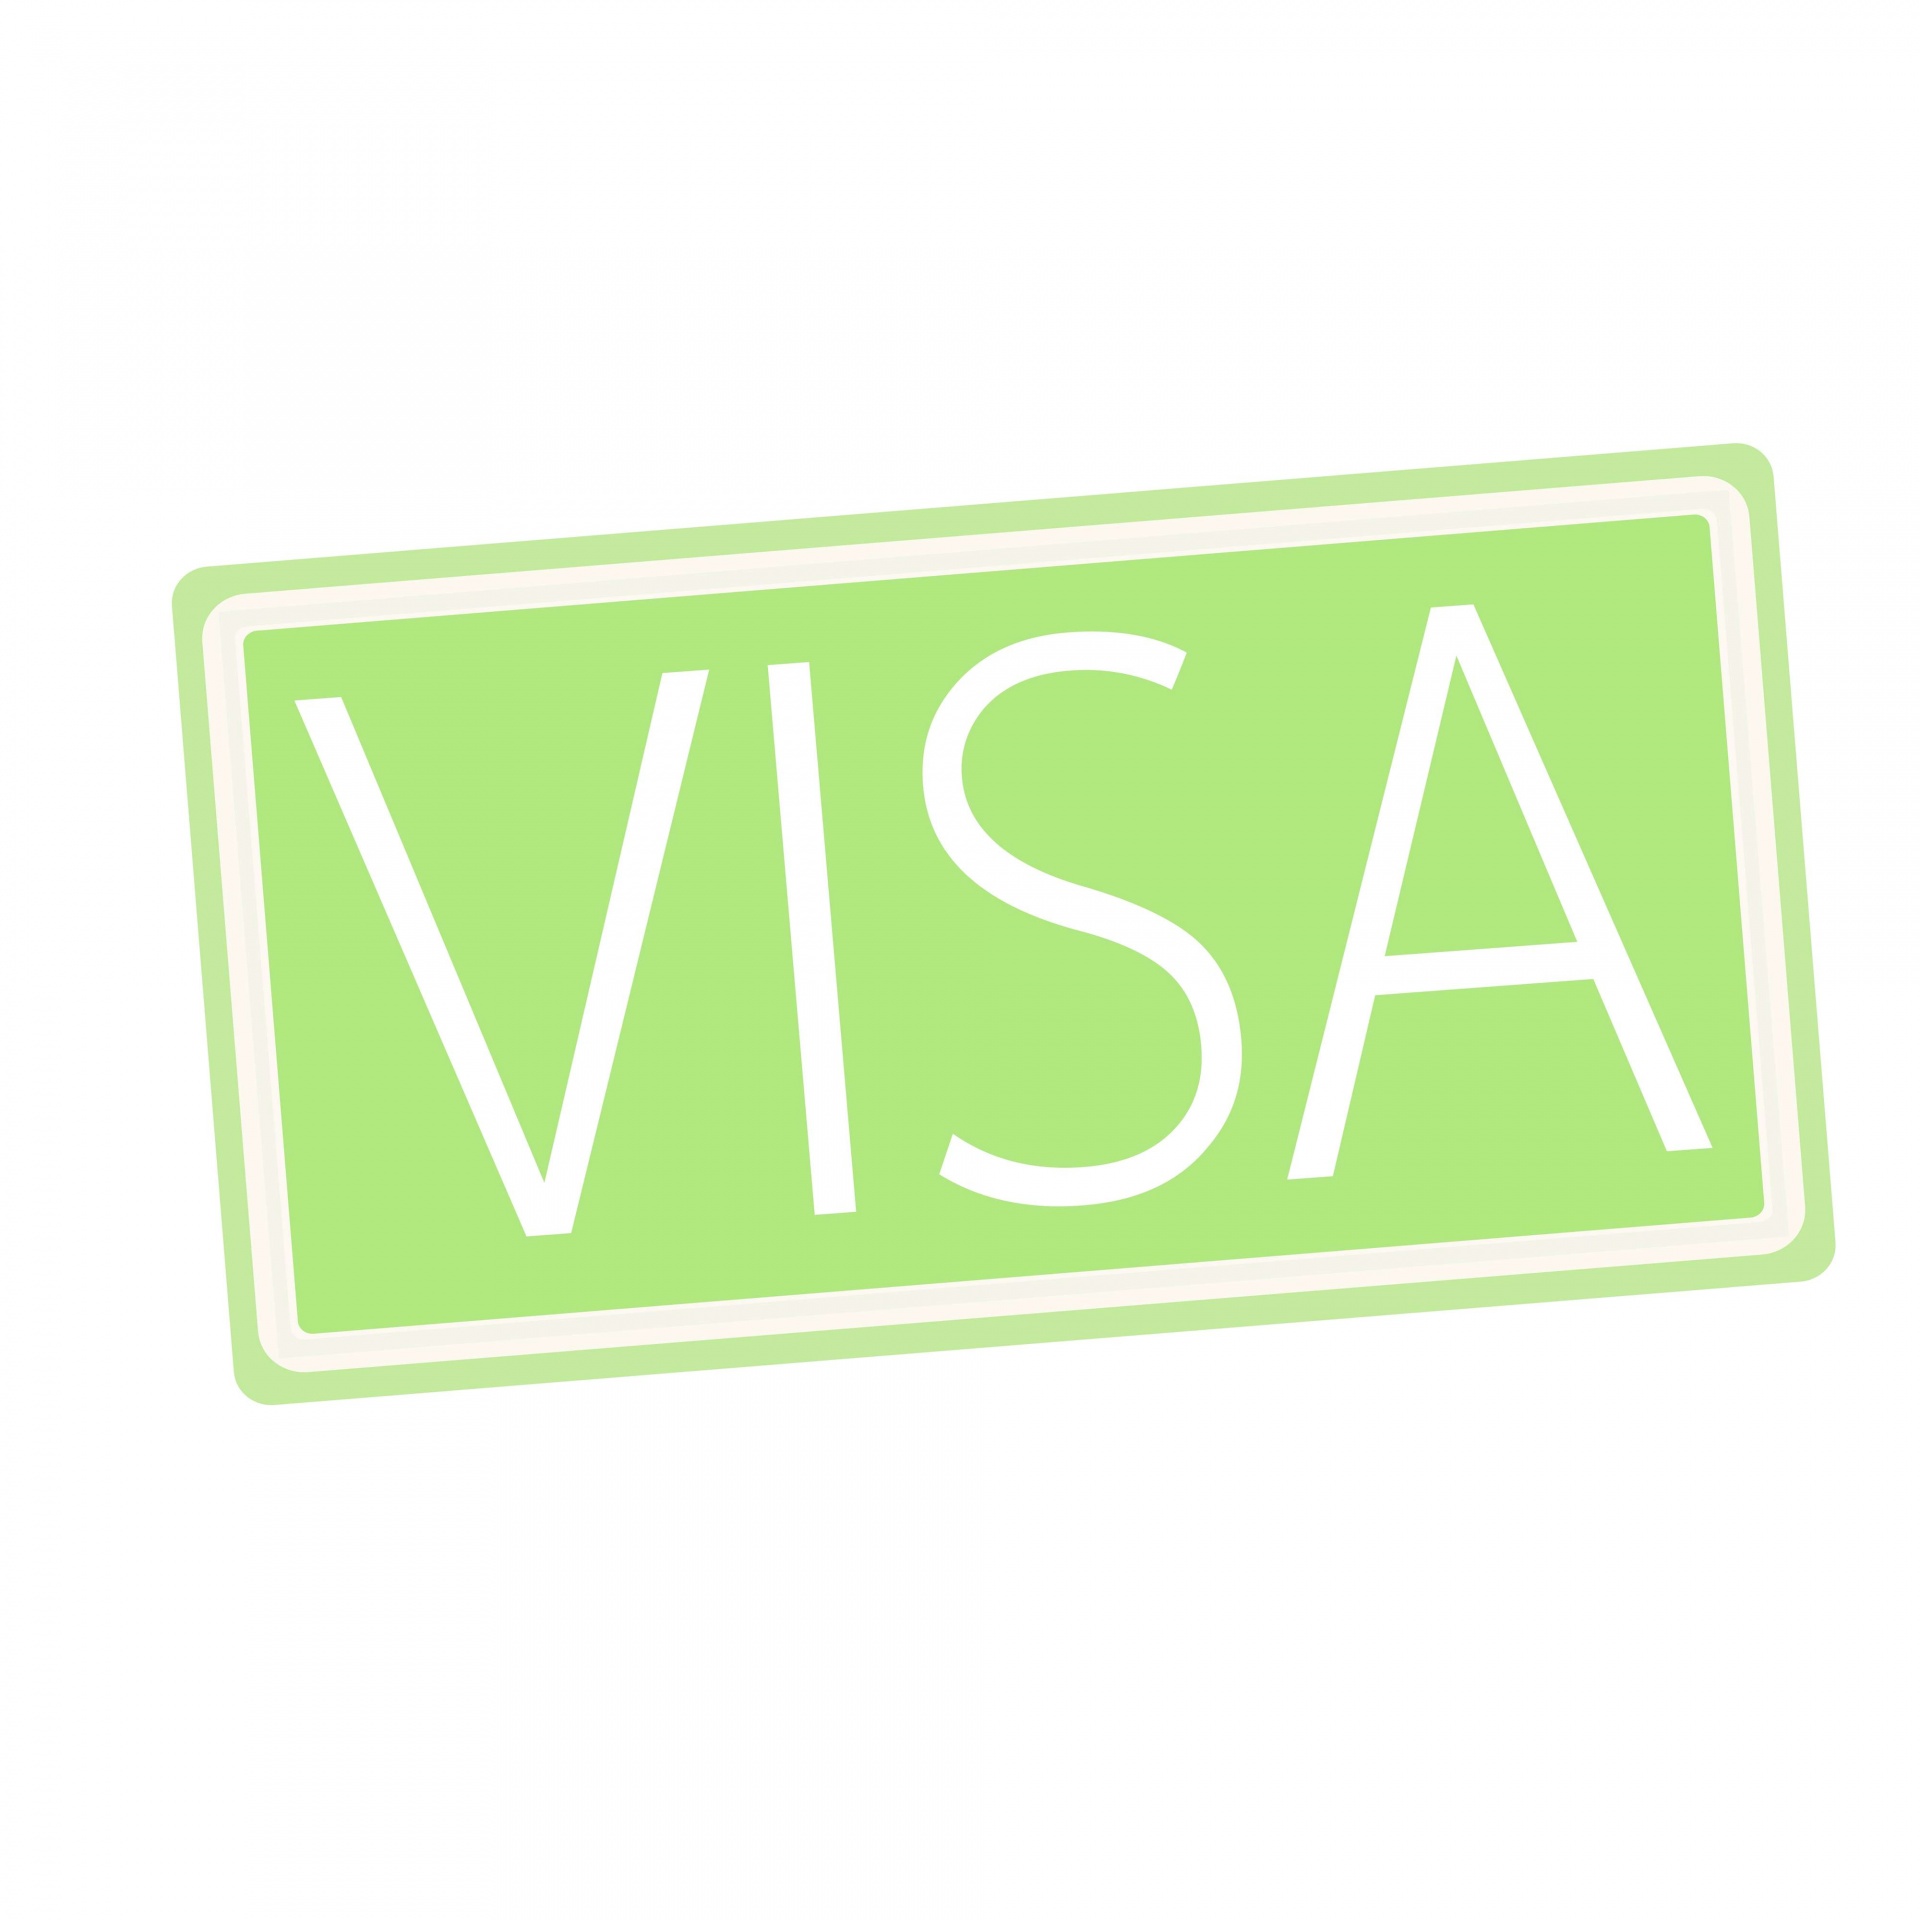 Texto de sello blanco de VISA en verde